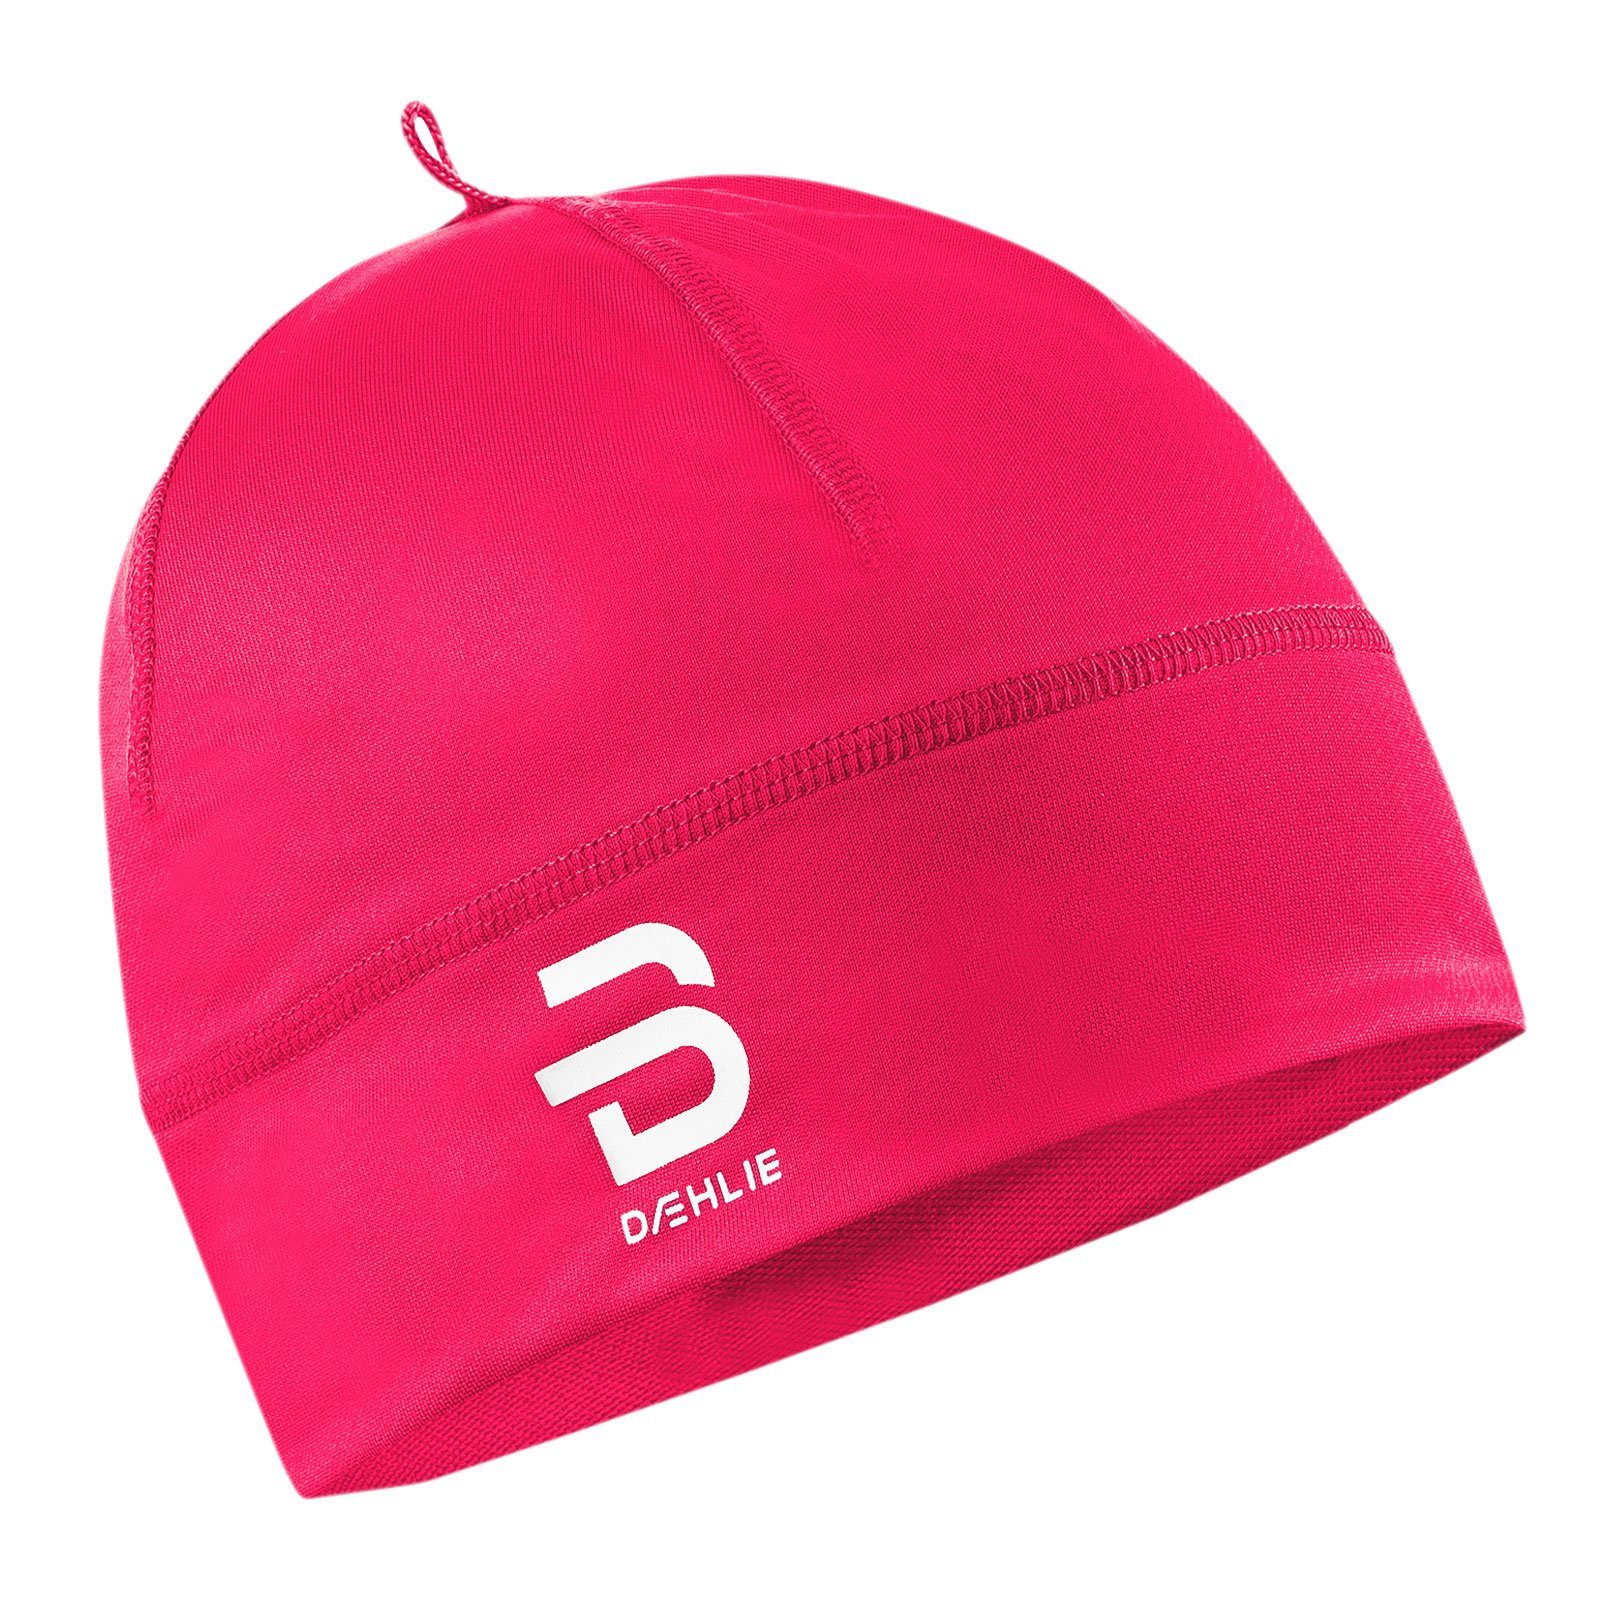 mit Skimütze rosa Hat Polyknit Logo DAEHLIE dekorativem